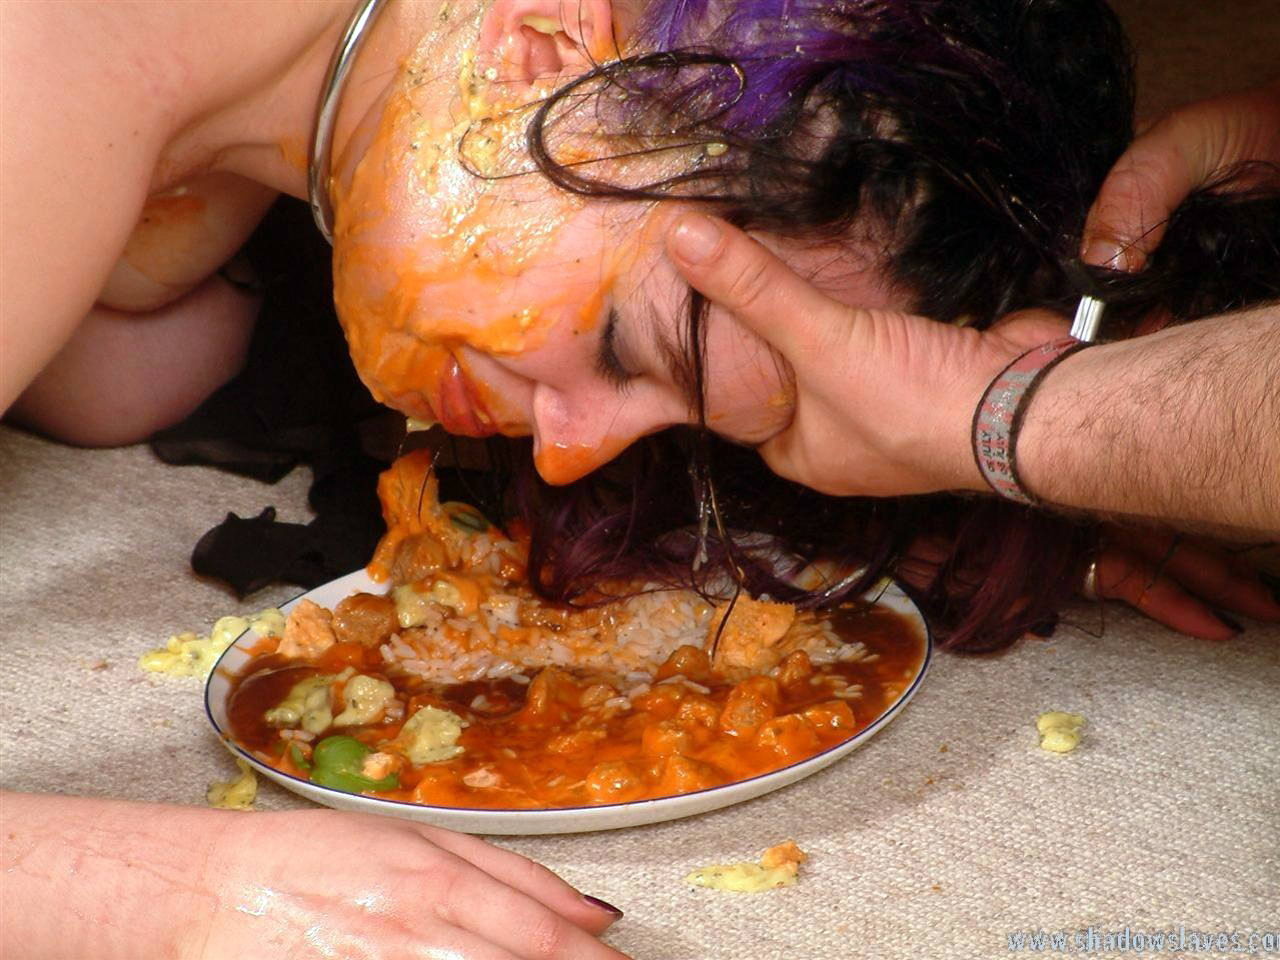 Messy food humiliation and bizarre domination of dirty slavegirl Nimue #72156585